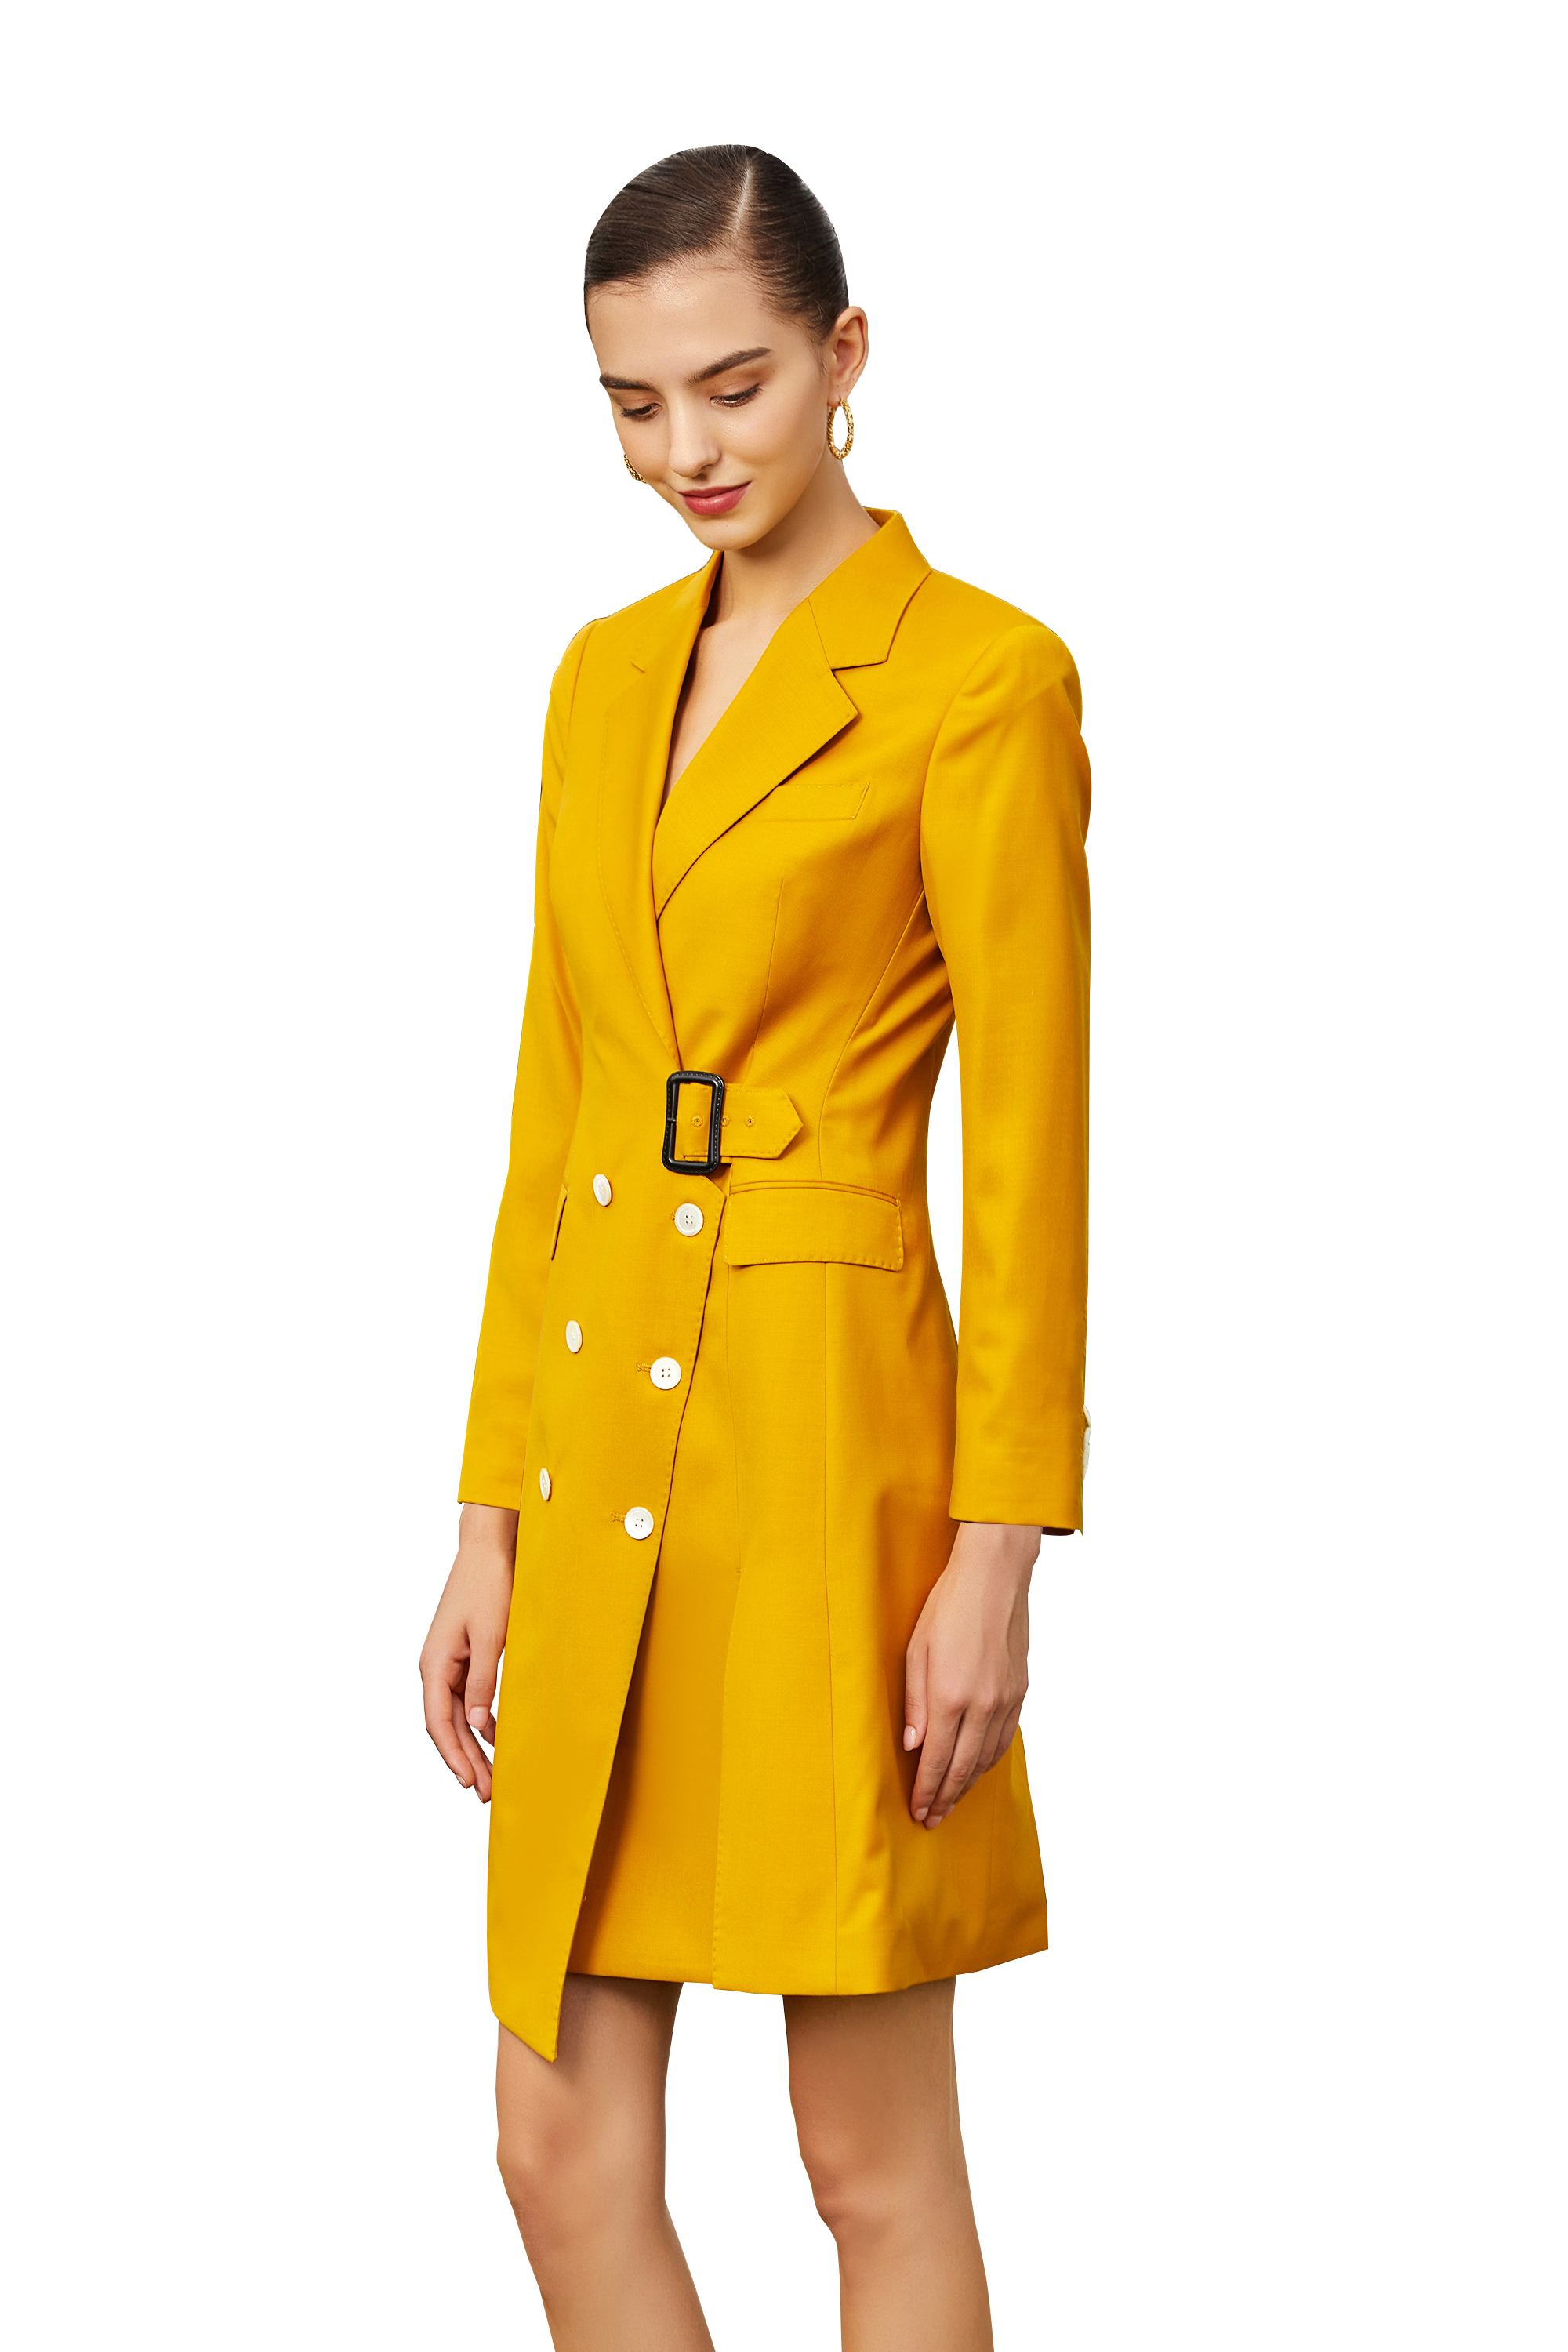 Ginger Yellow Double-breasted Coat Short Sleeve Dress - FashionByTeresa